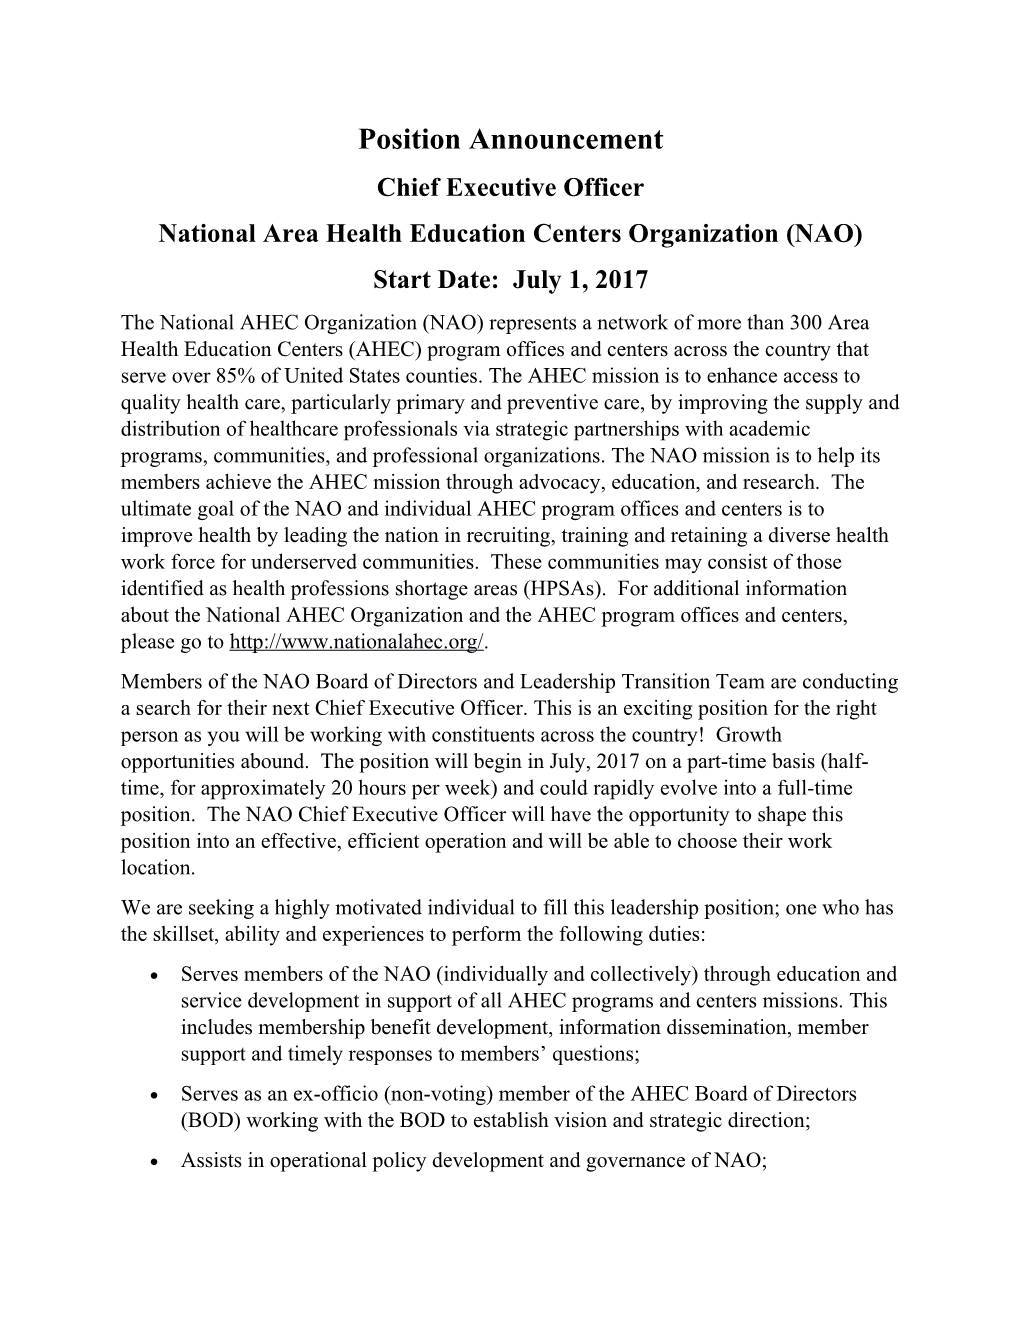 National Area Health Education Centers Organization (NAO)